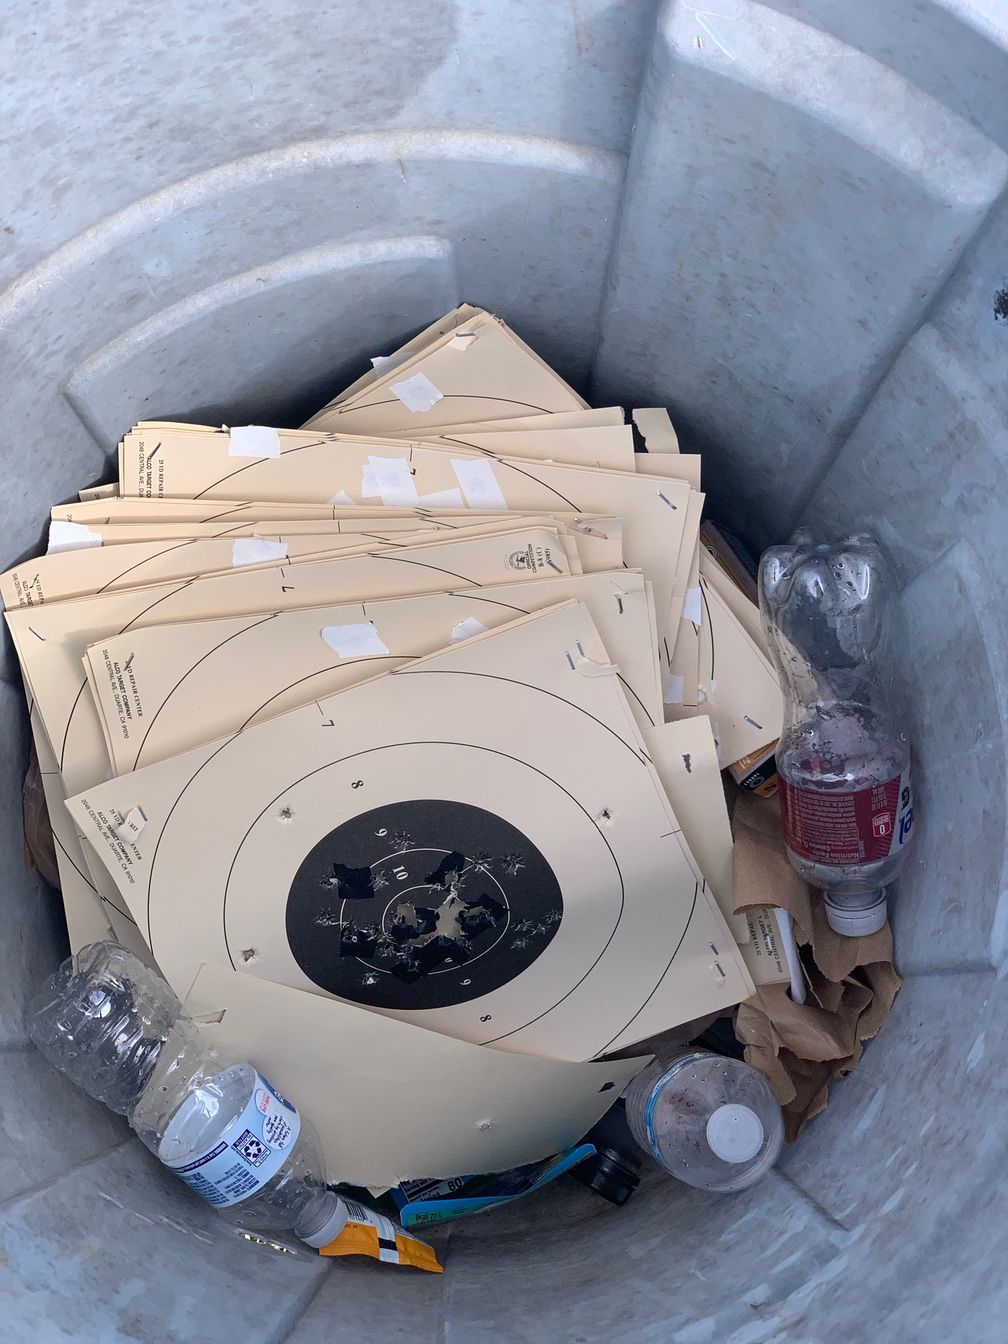 Trash can full of B-8 targets